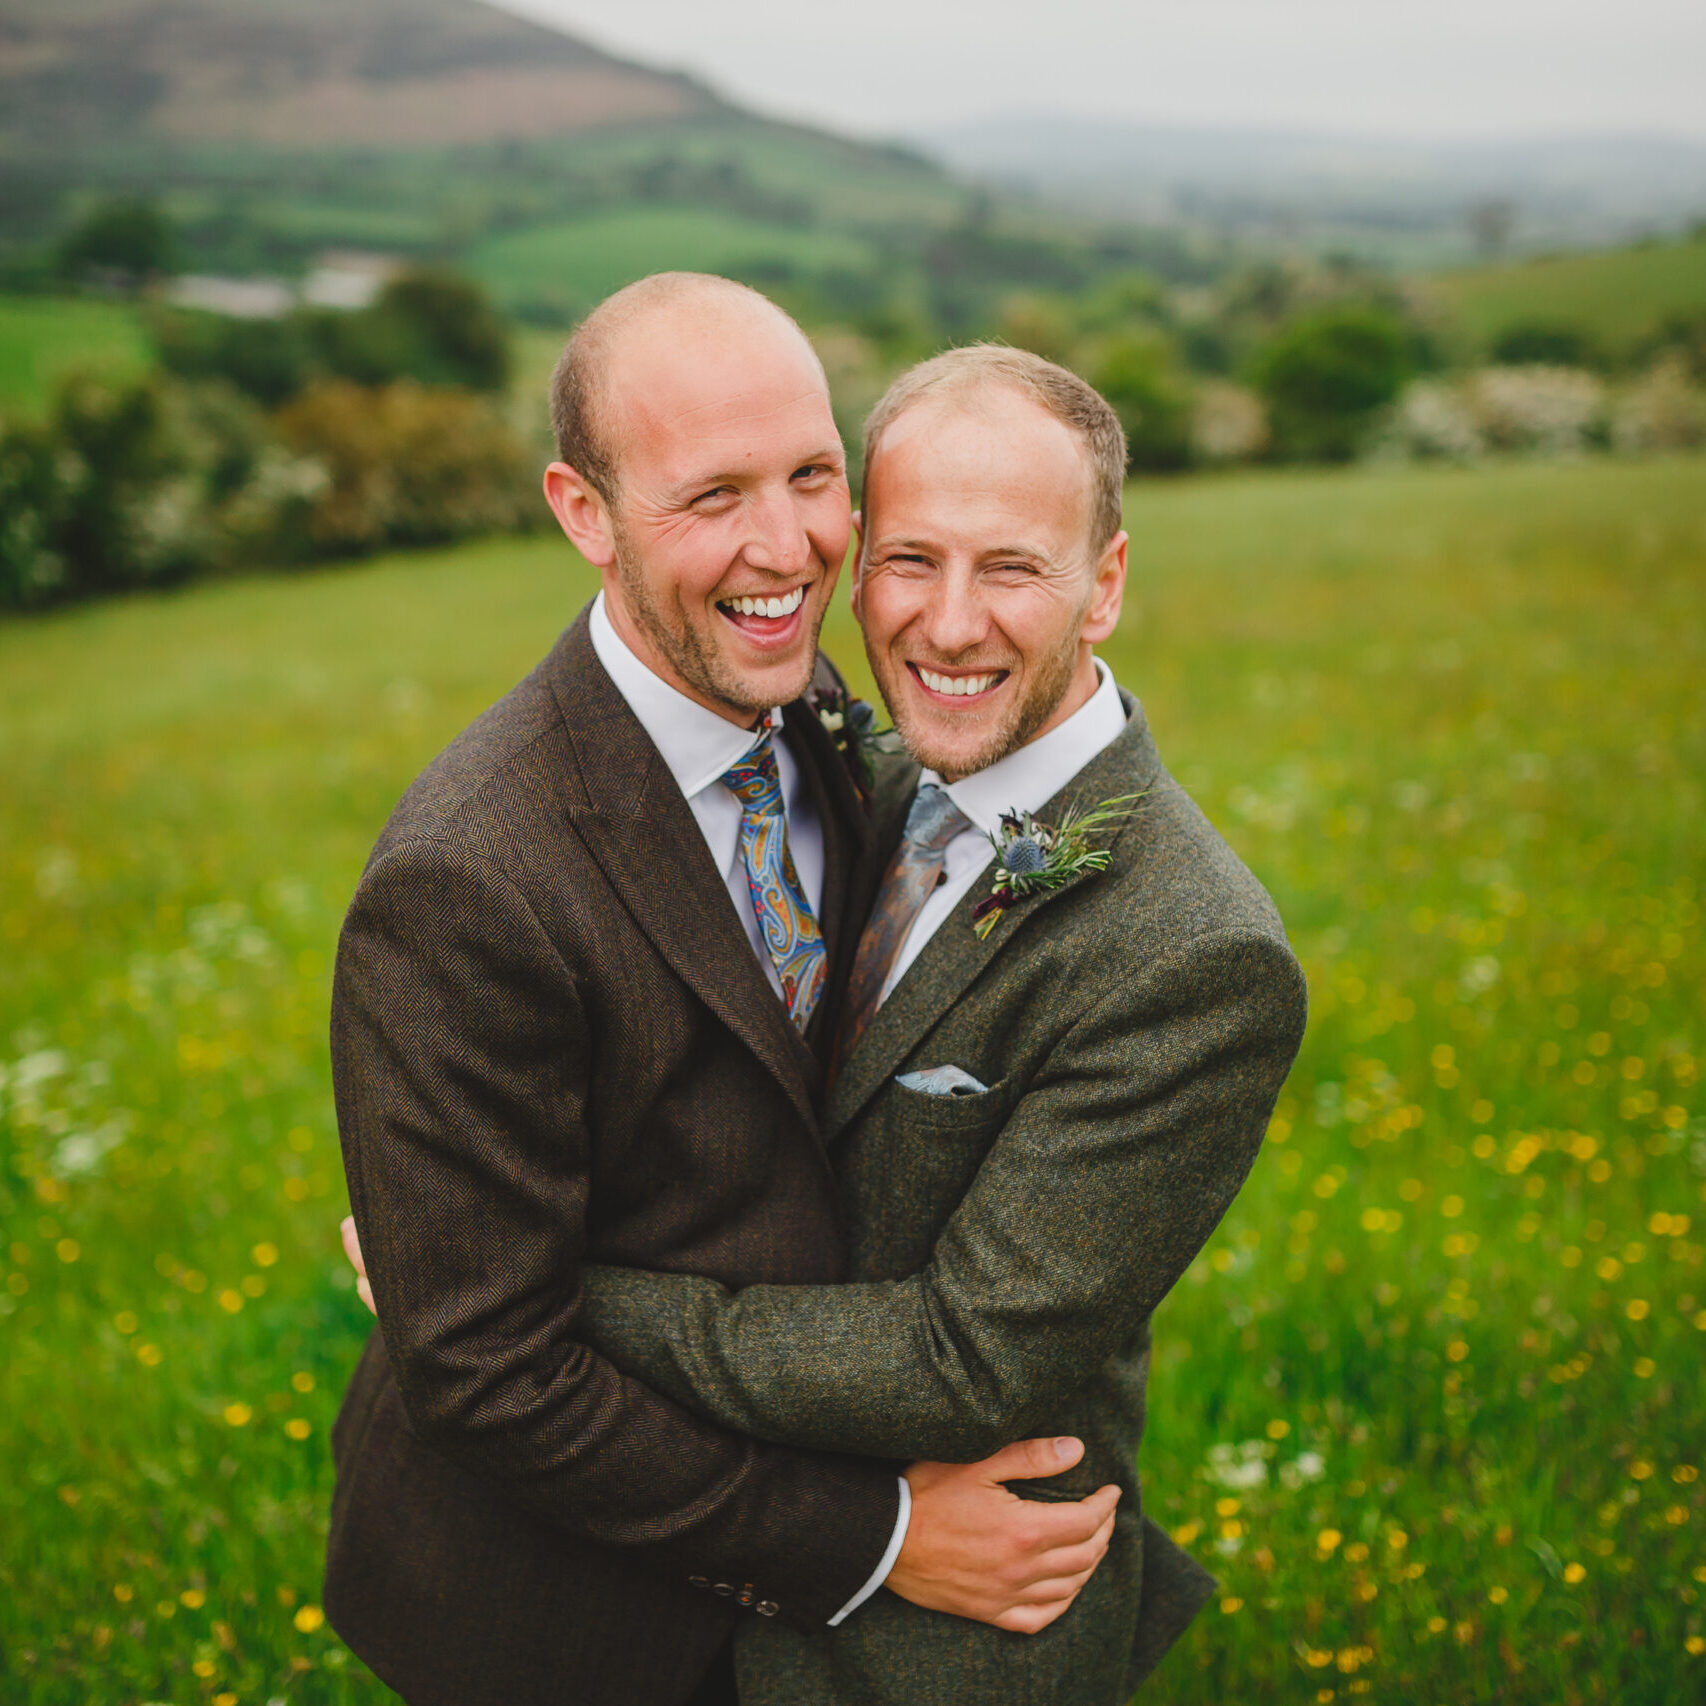 Leeds LGBTQ+ Wedding Photographer